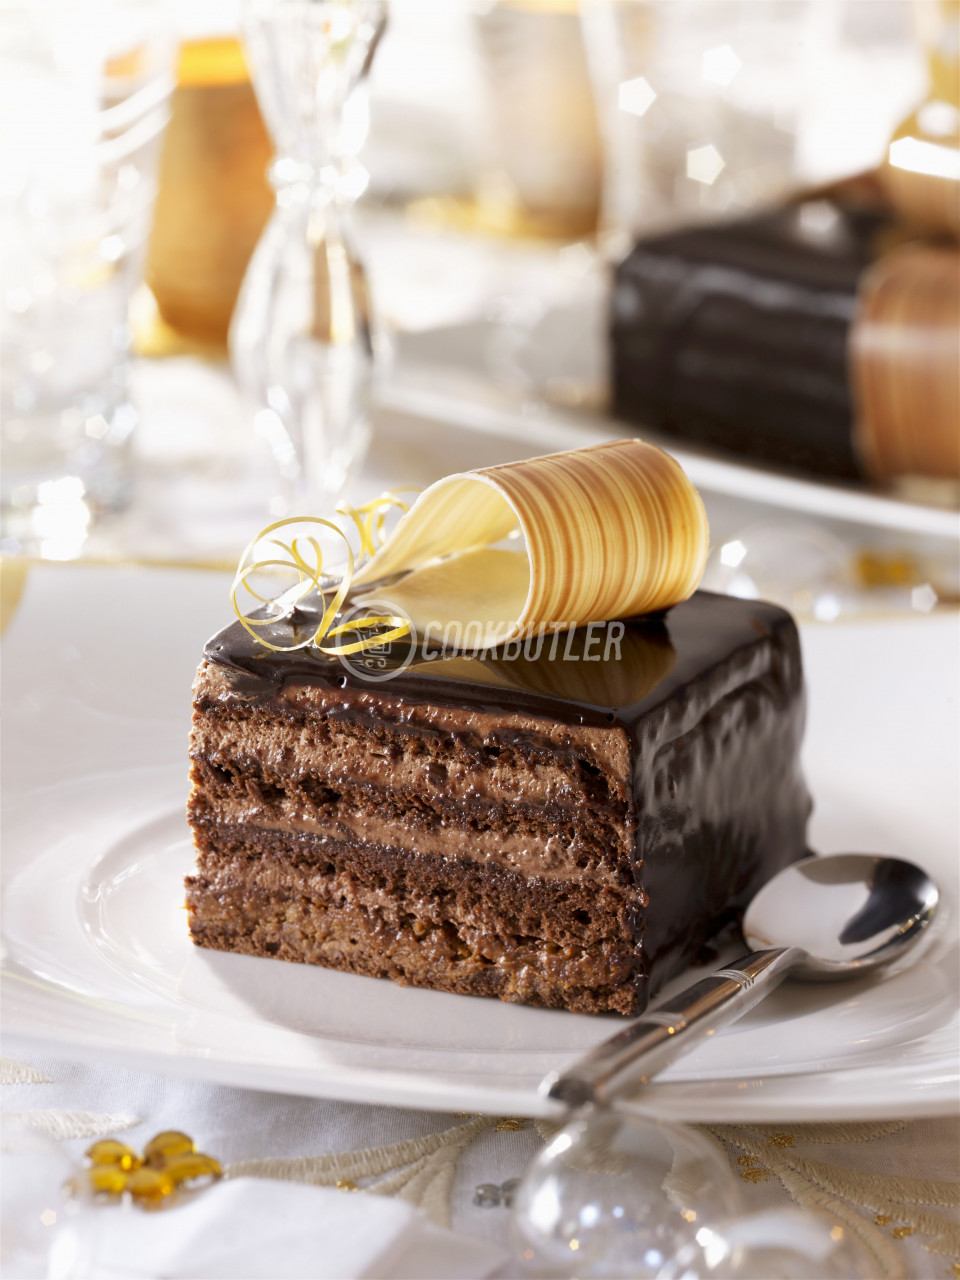 Cotillon Chocolat (Christmas cake, France) | preview